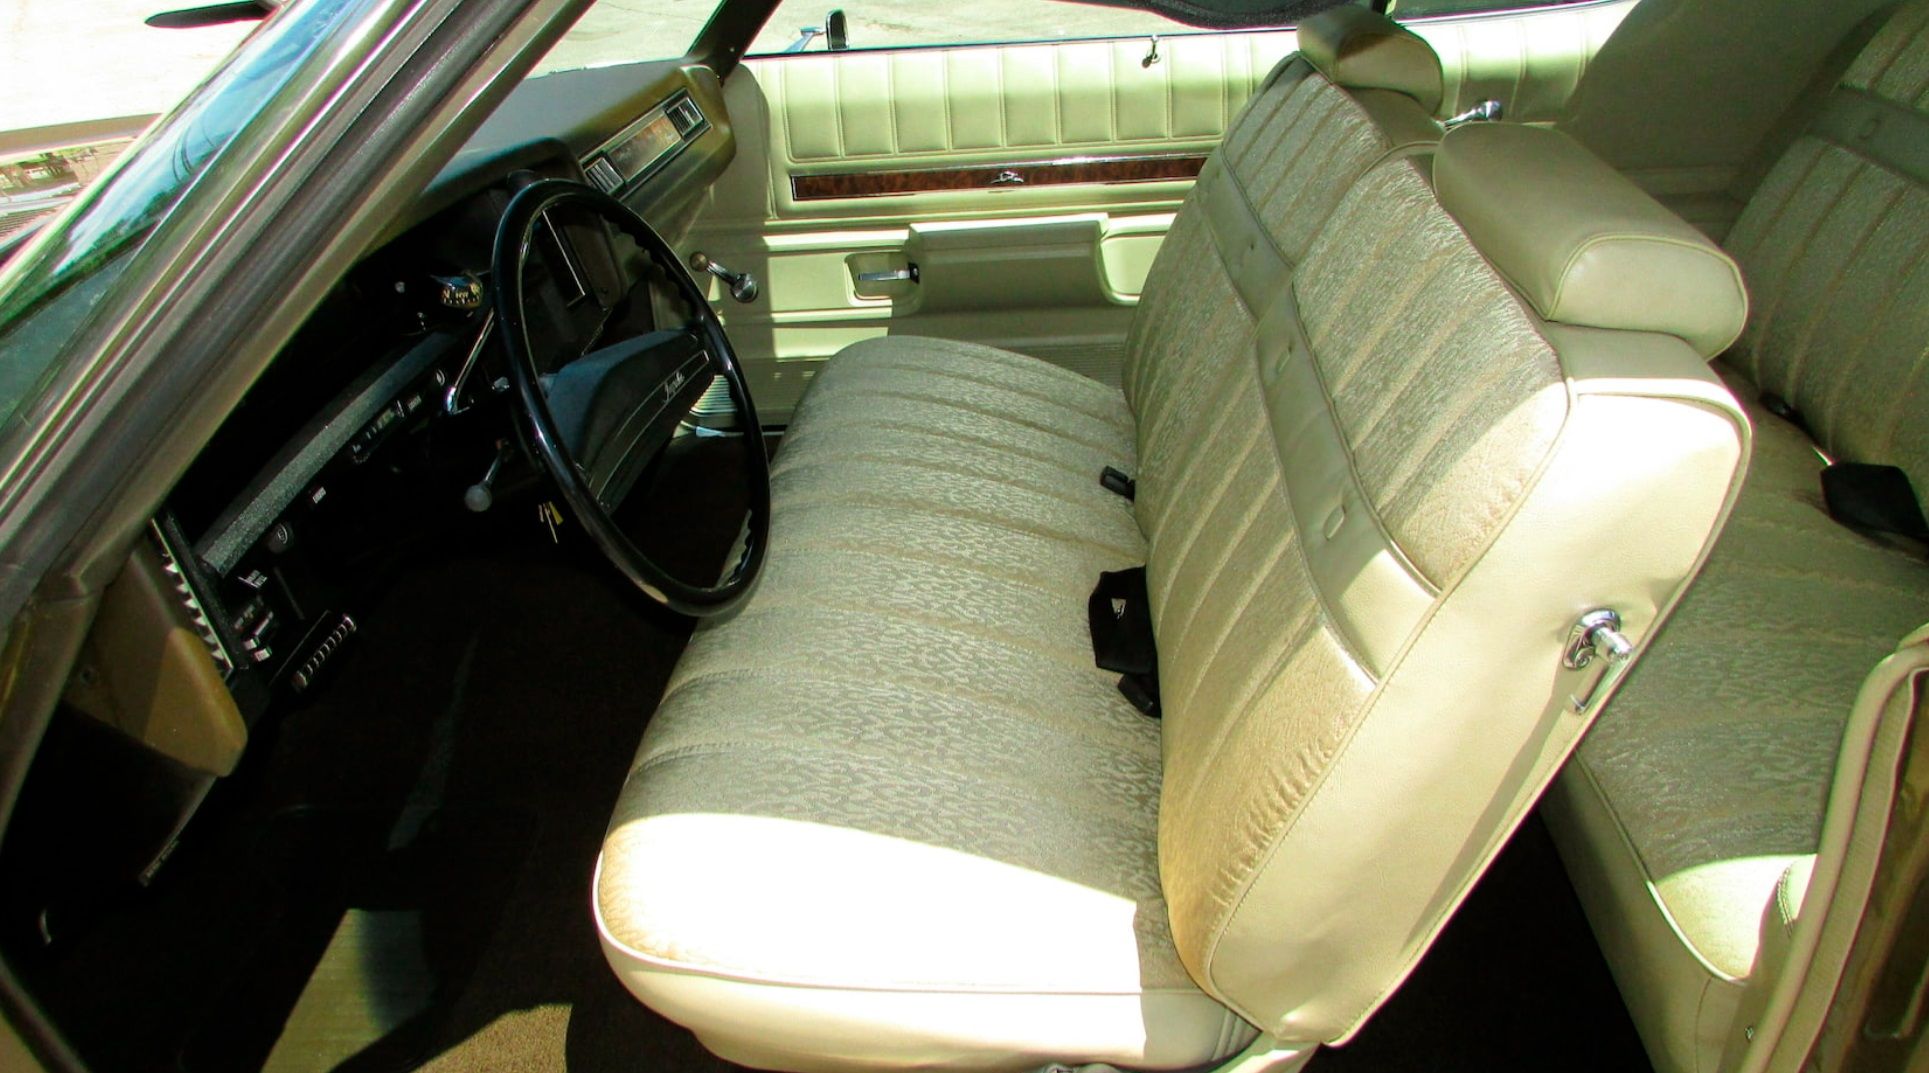 The interior of the 1972 Chevrolet Impala.